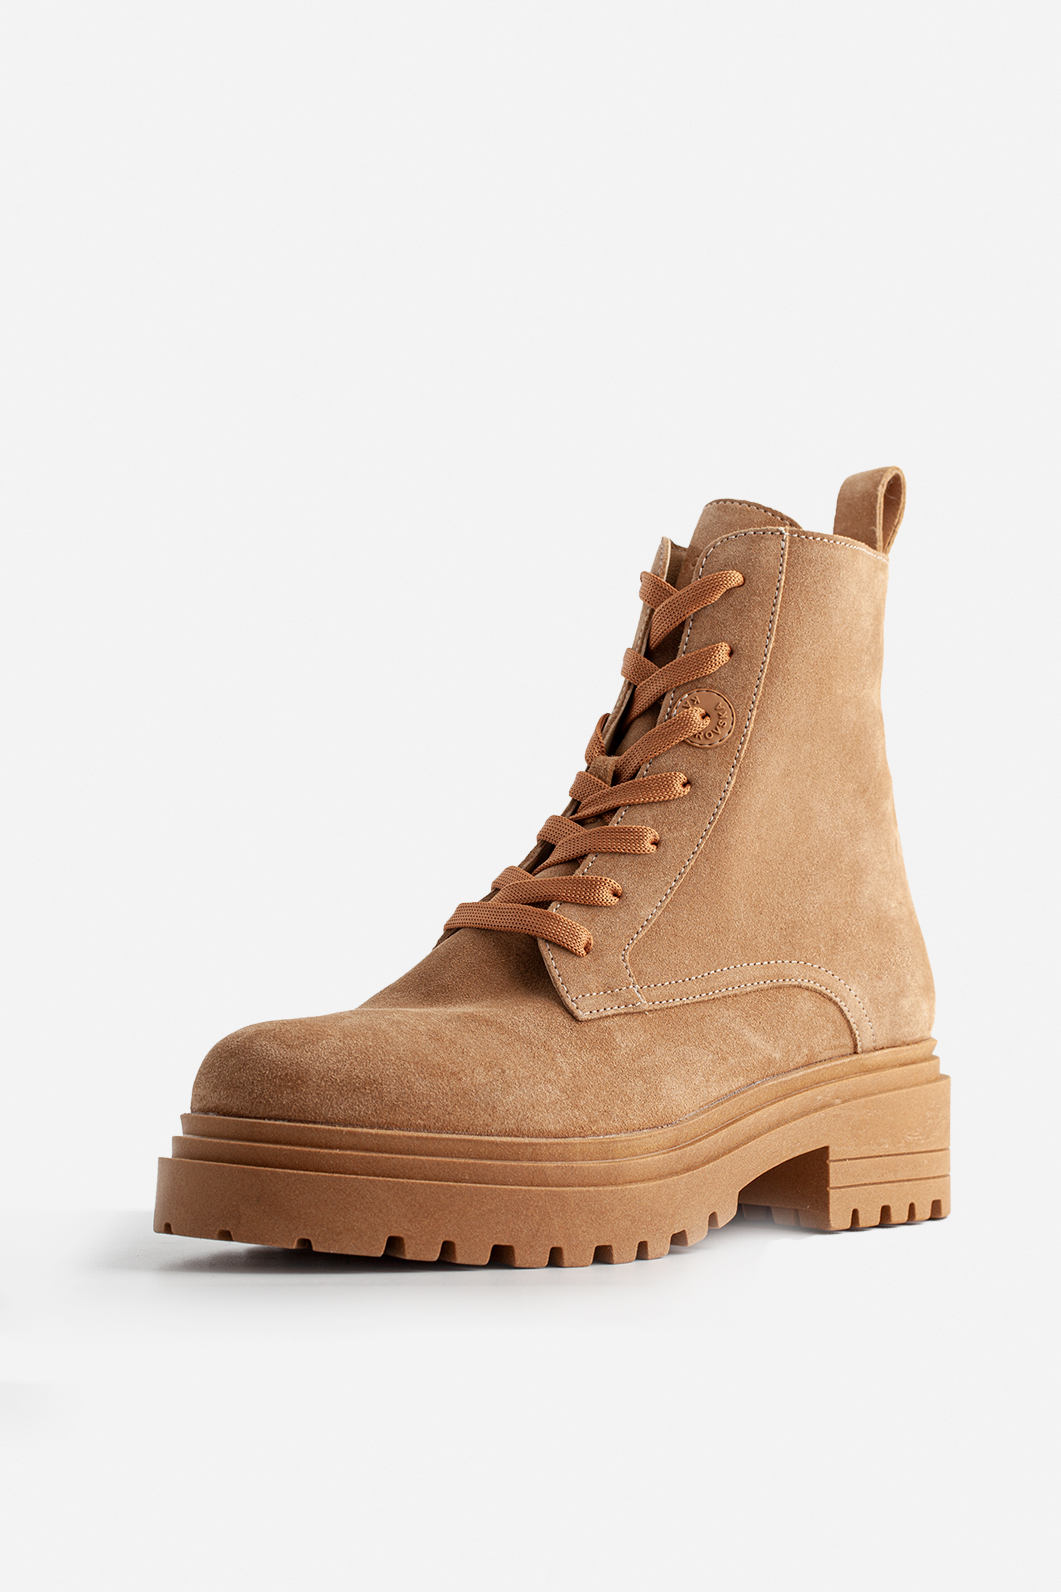 Riri brown suede
boots